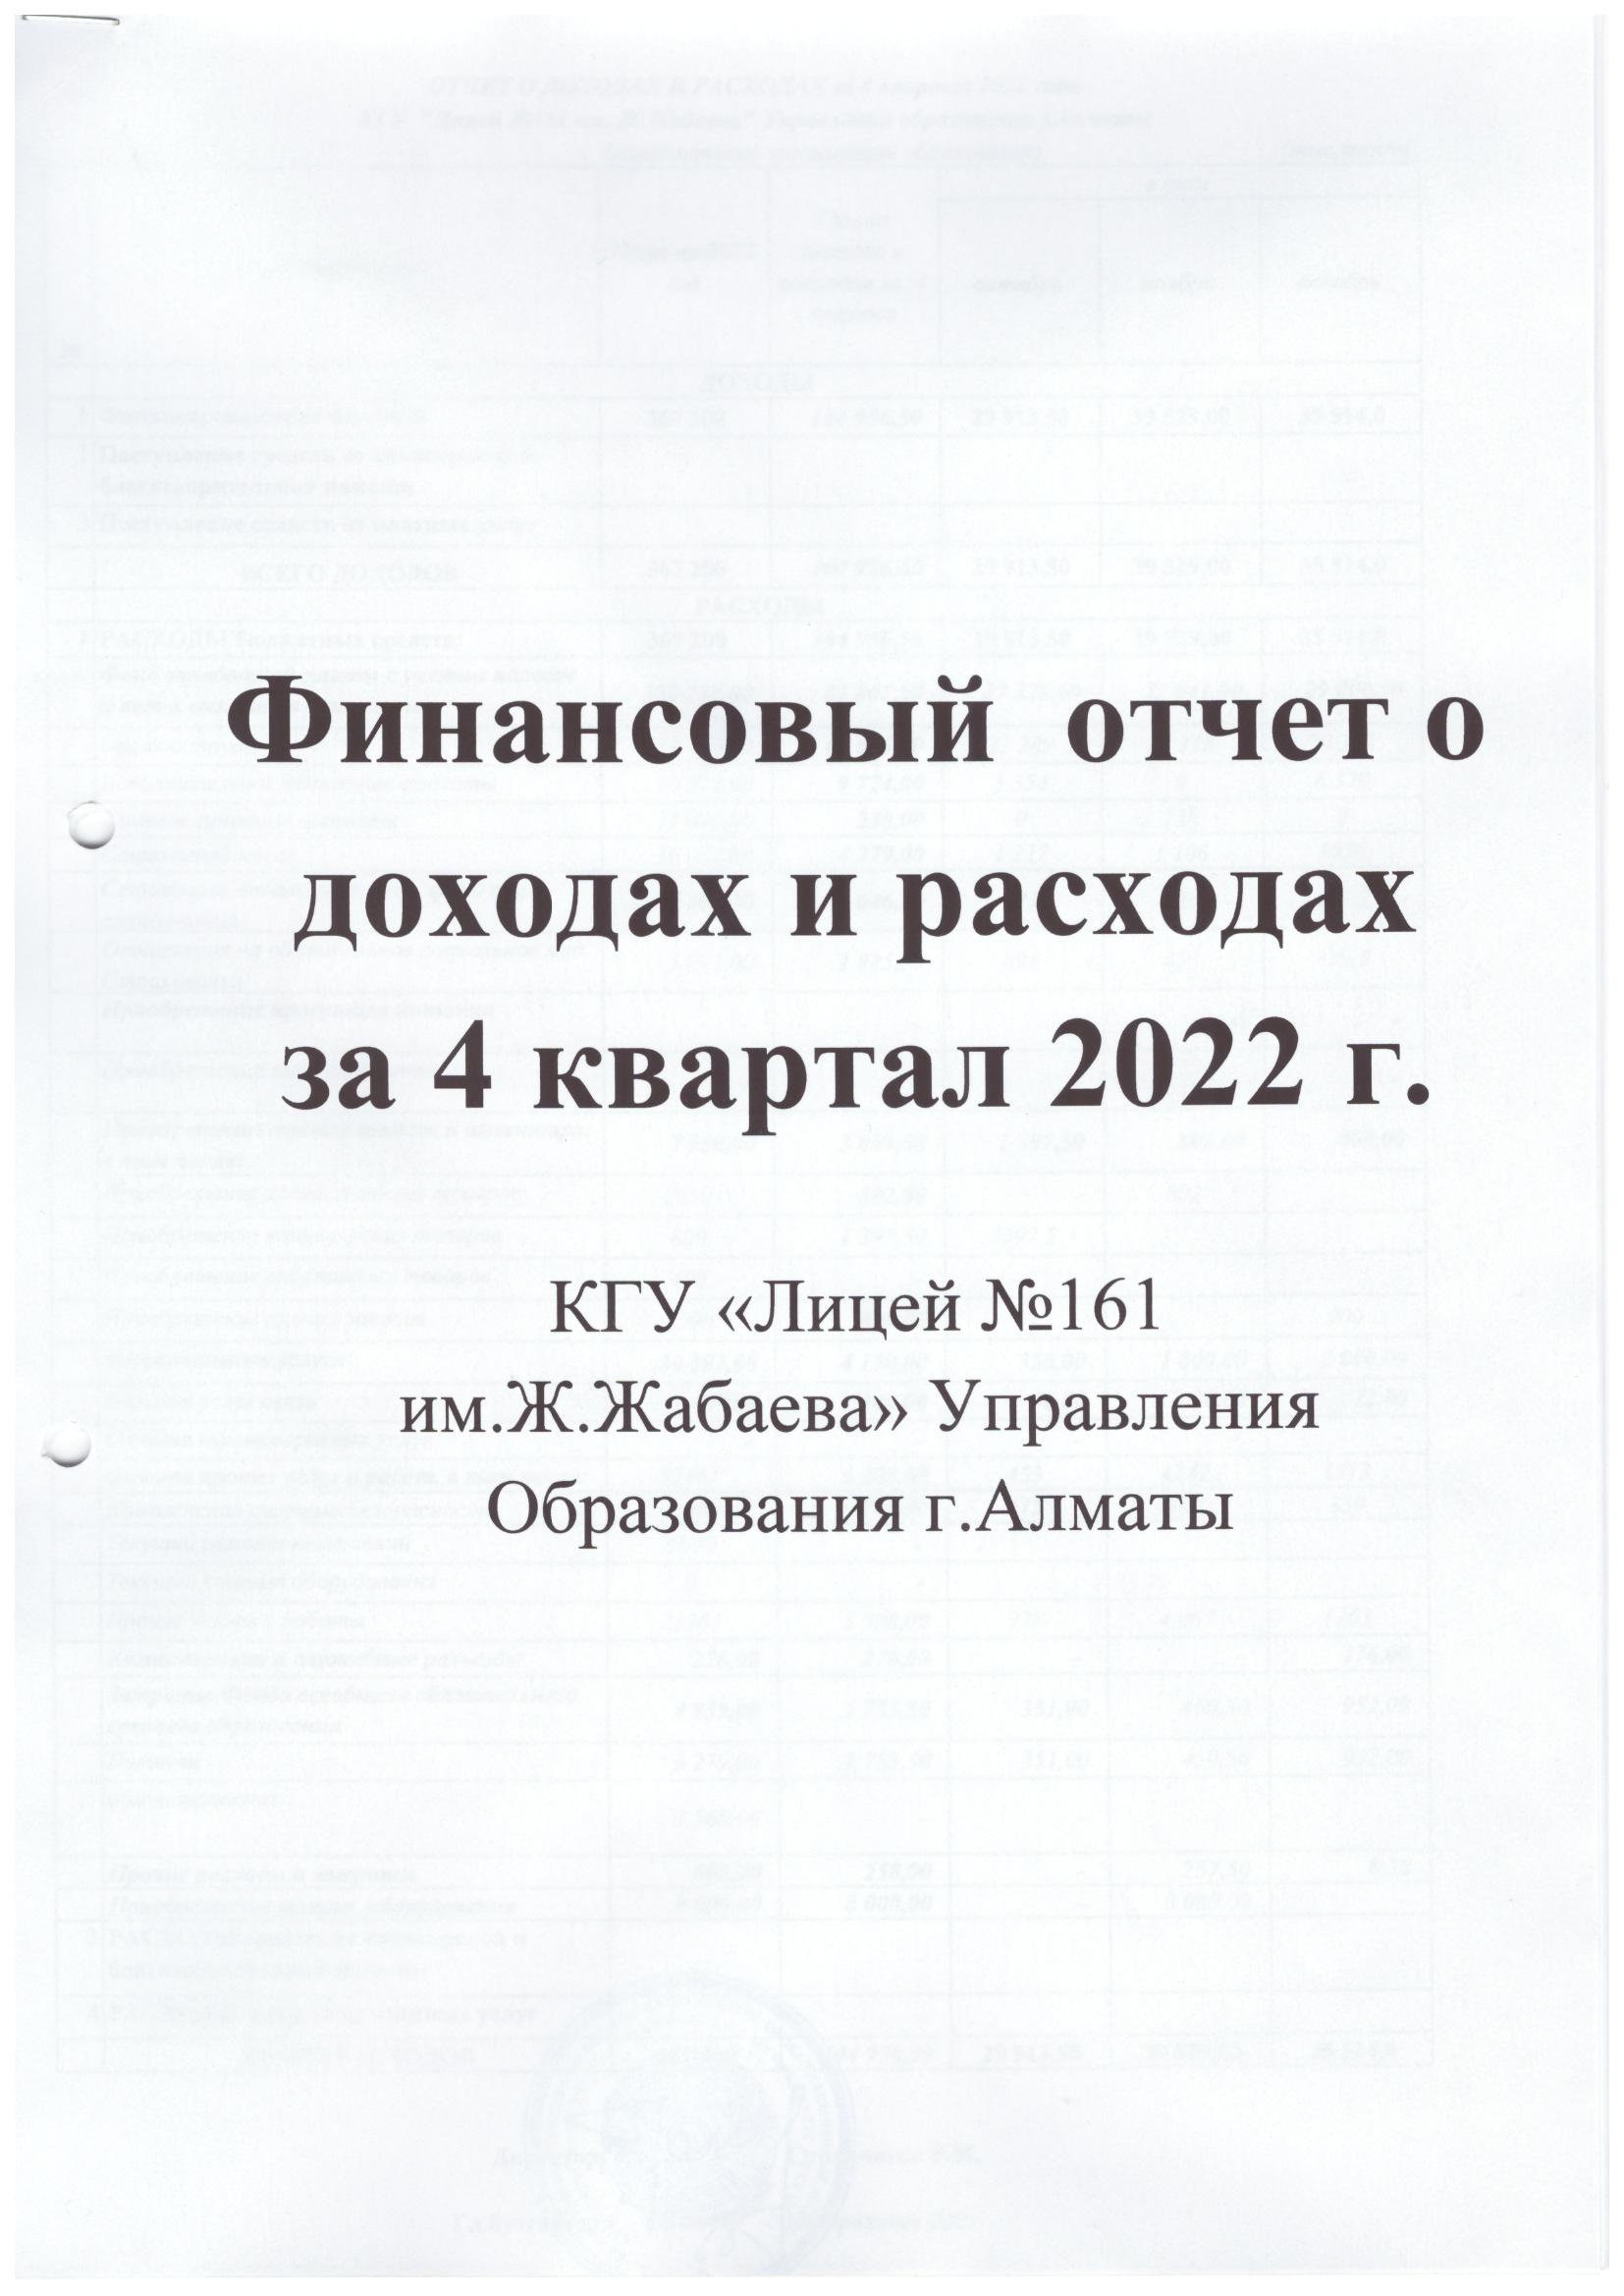 Отчет о доходах и расходах за 4 квартал 2022 года